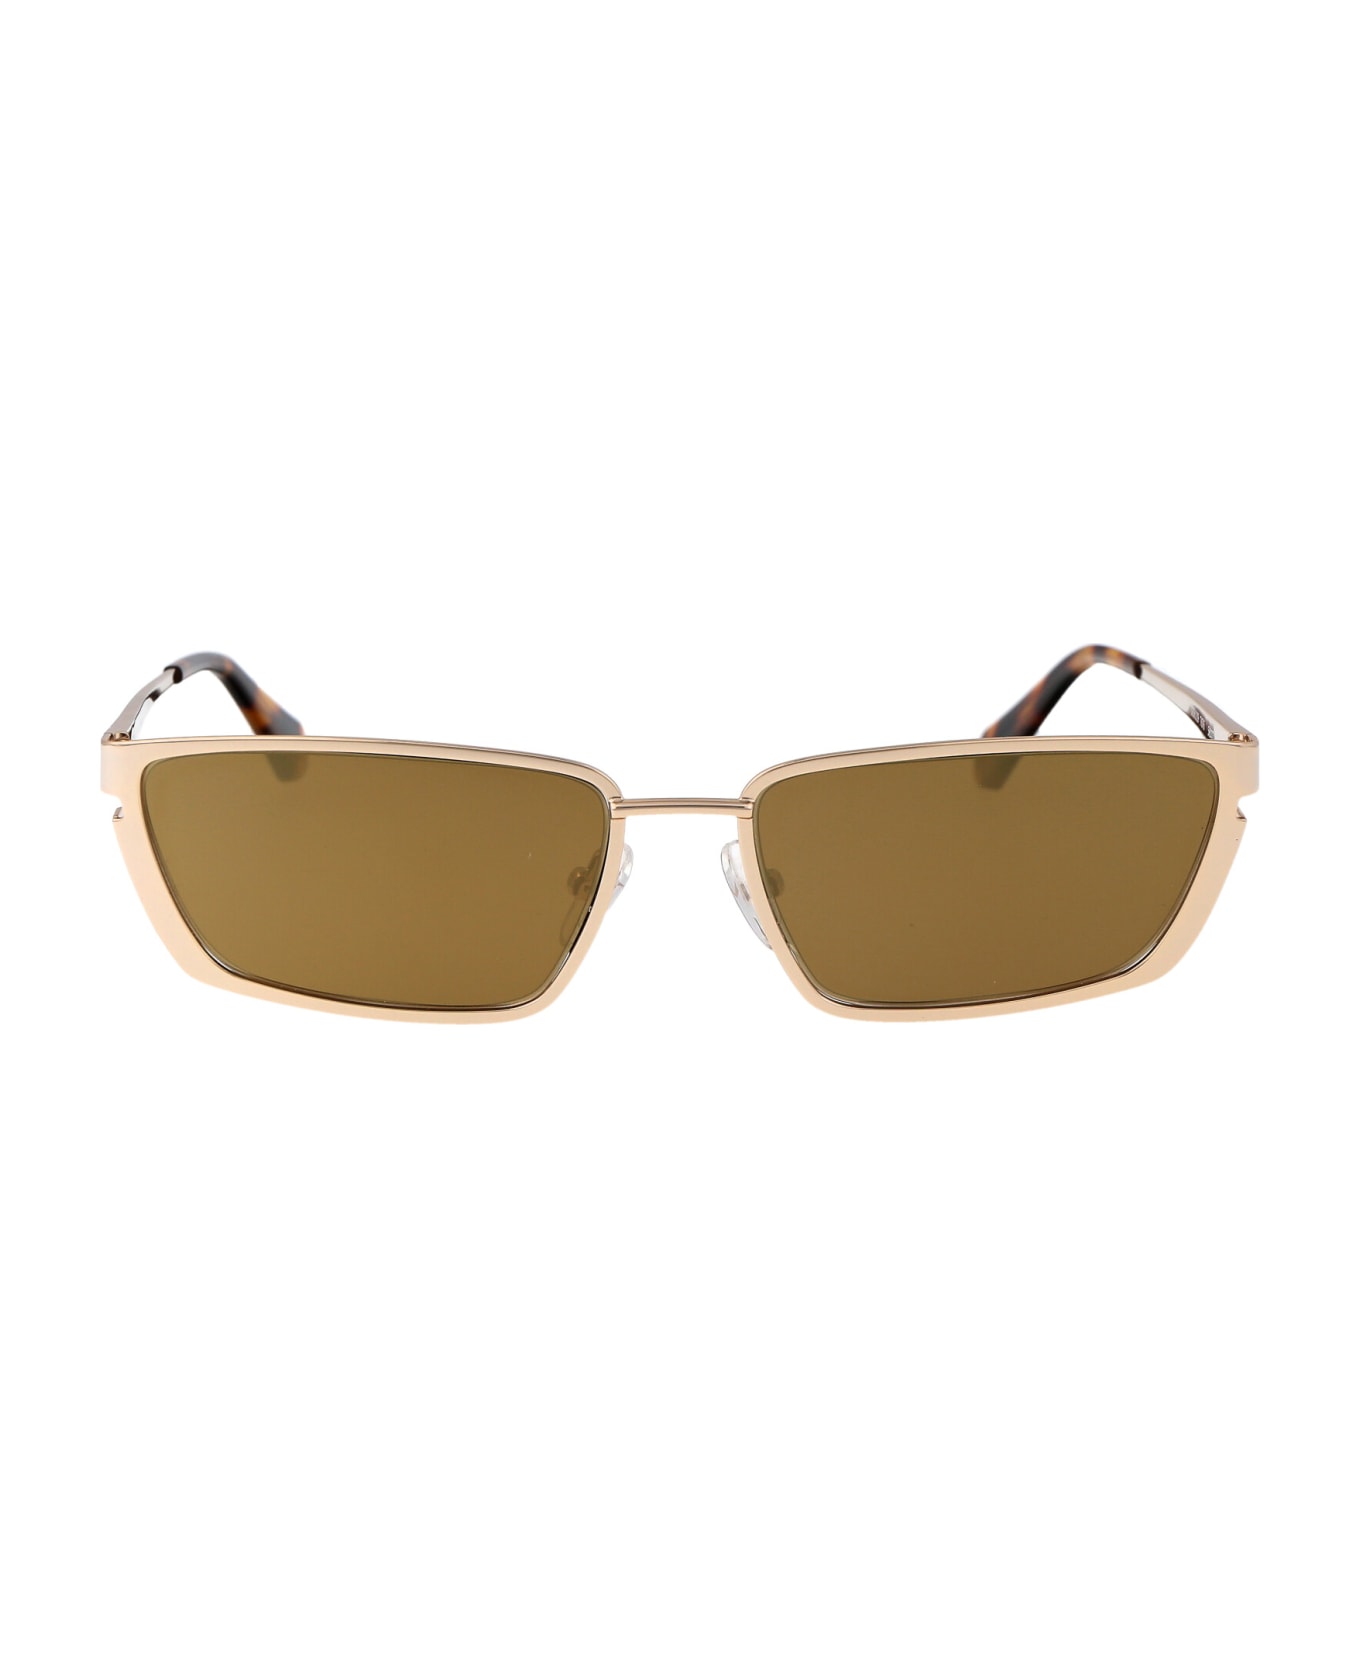 Off-White Richfield Sunglasses - 7676 GOLD GOLD  サングラス